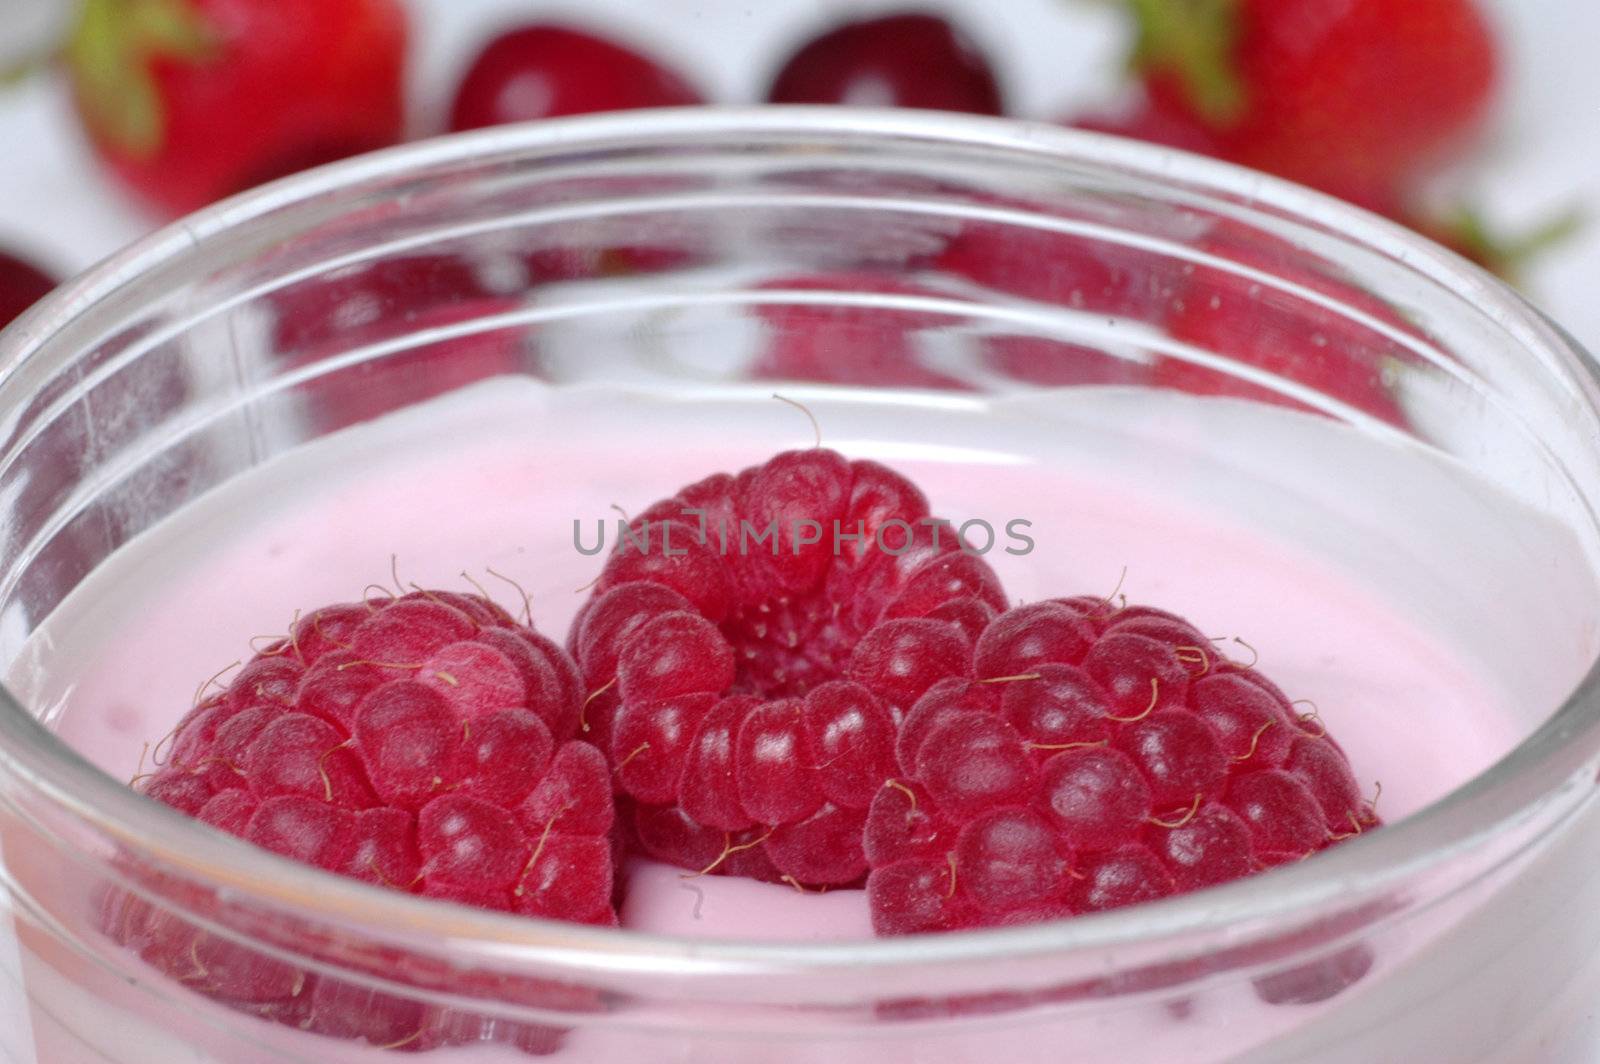 Three Rapsberries by Bestpictures